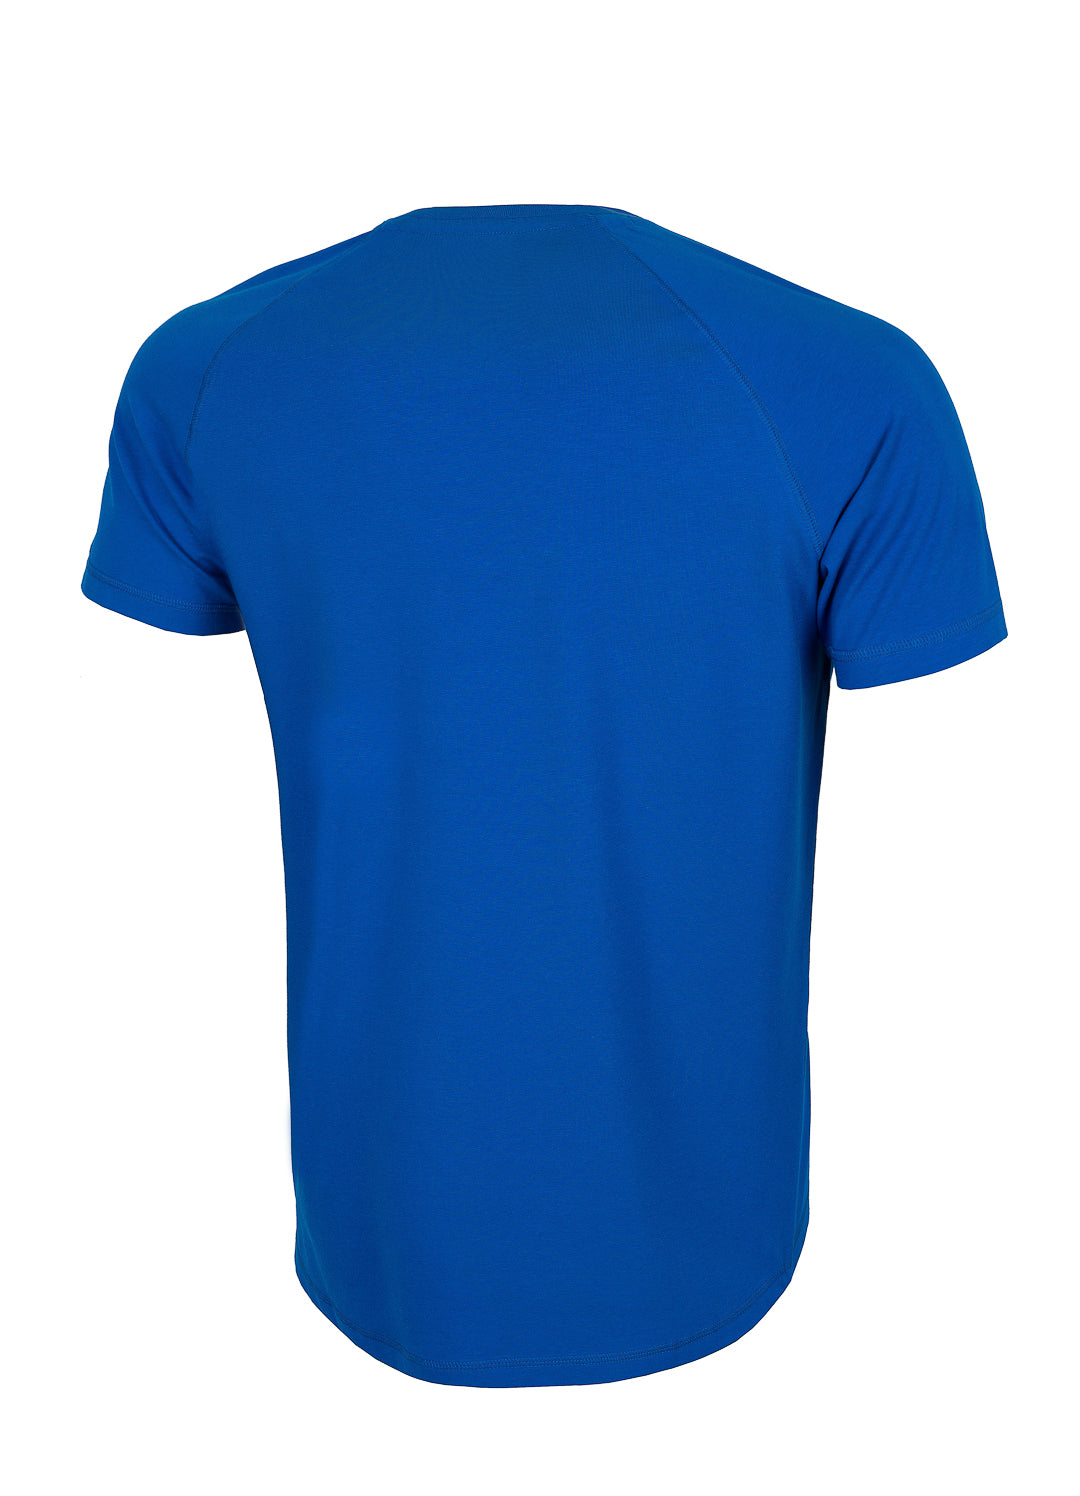 T-shirt Spandex MERCADO 210 GSM Royal Blue - Pitbull West Coast International Store 